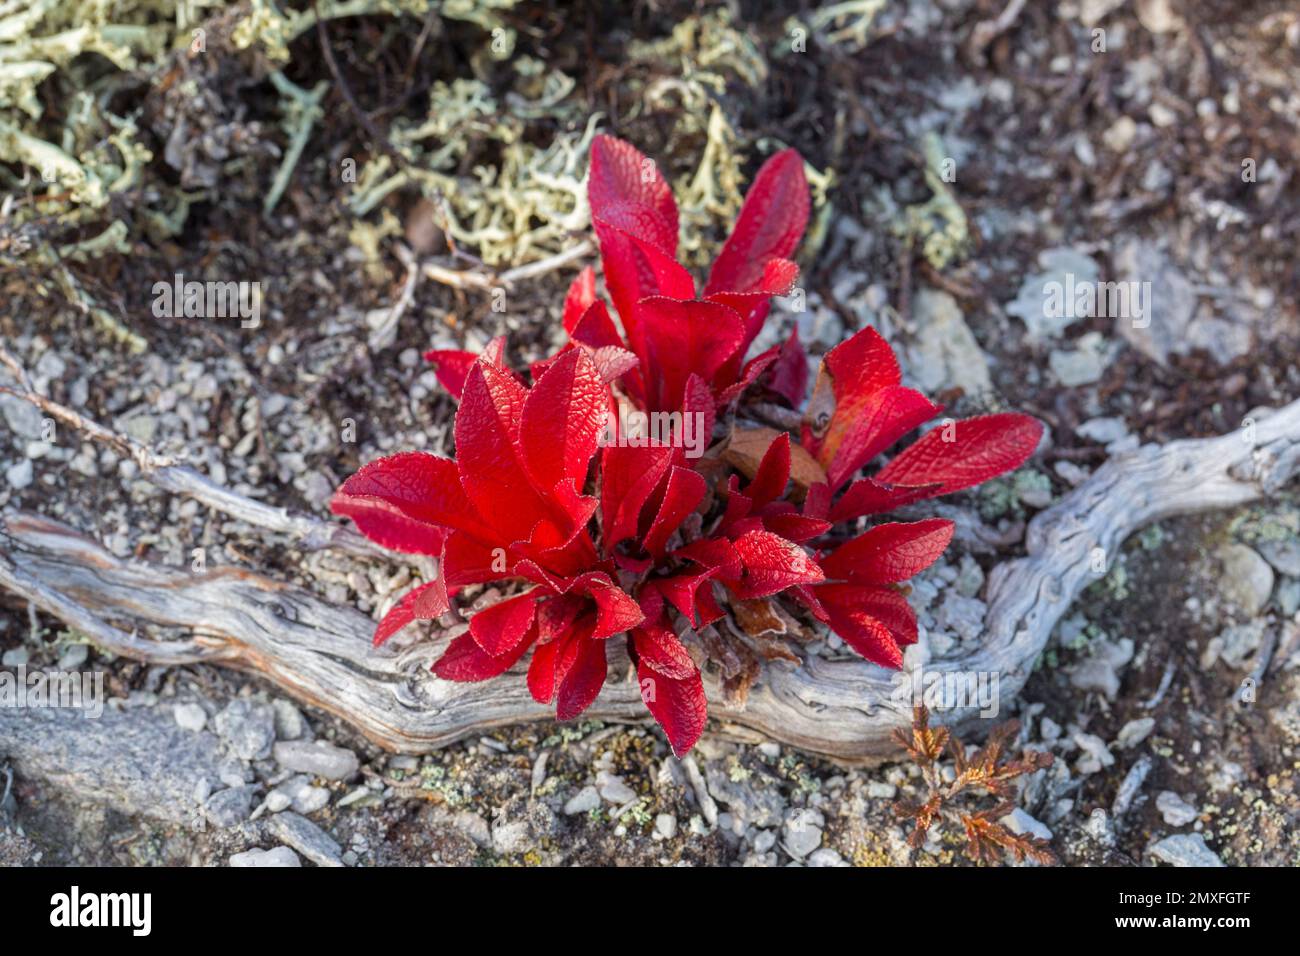 Bearberry alpino / bearberry montano / bearberry nero (Arctous alpina / Arctostaphylos alpina) con colori autunnali rossi sulla tundra, Lapponia, Svezia Foto Stock